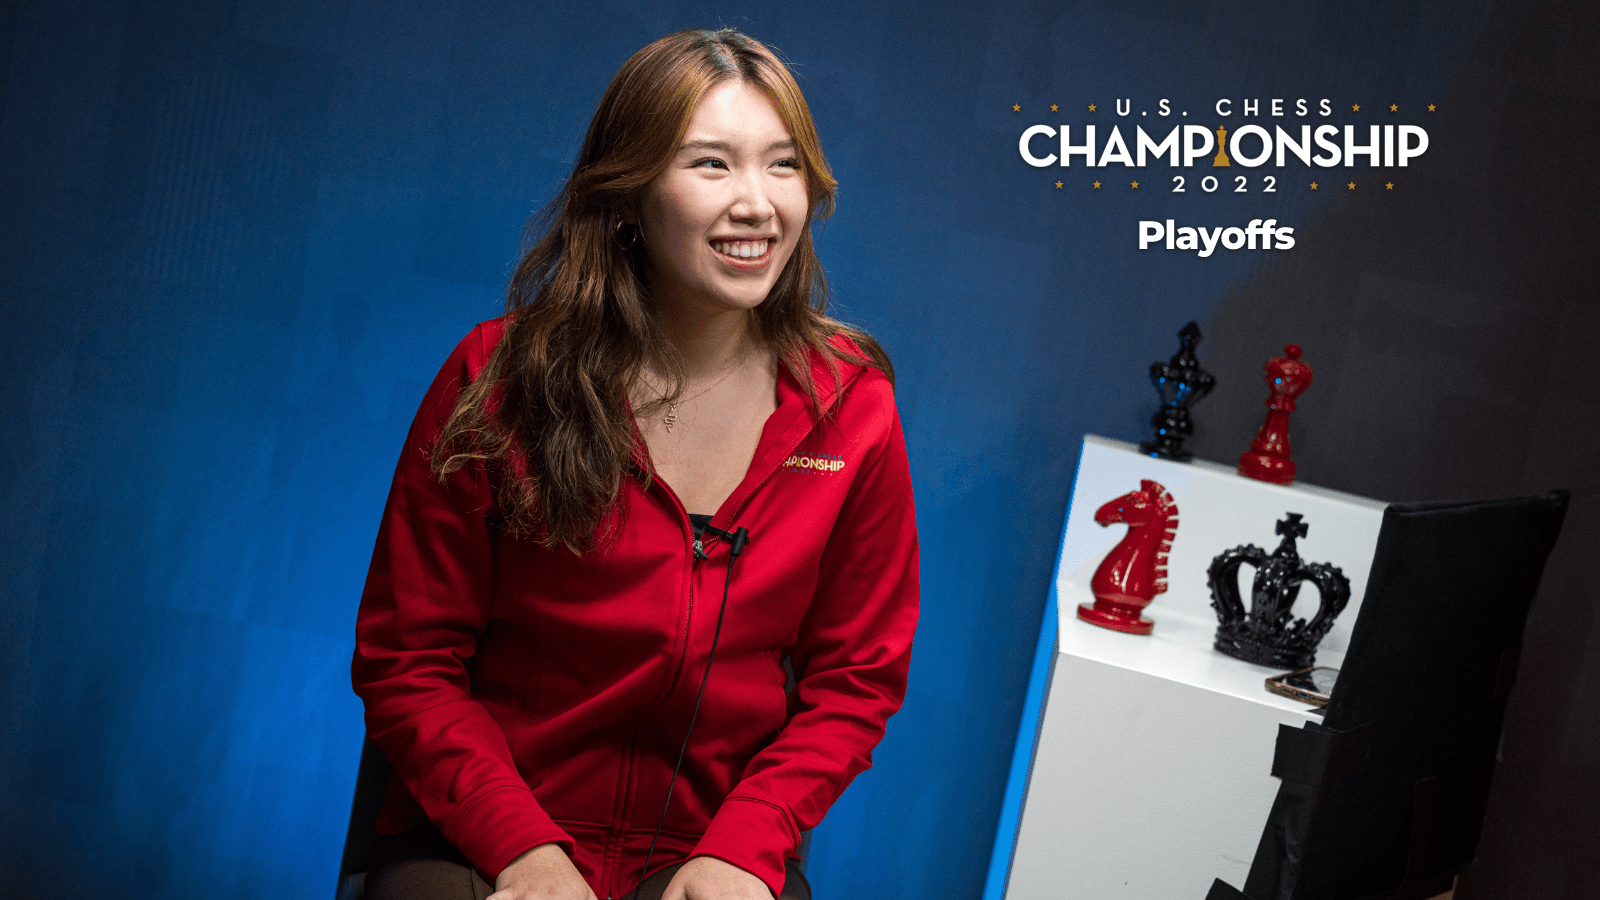 Yu wins the US Women’s Championship in Armageddon Clash